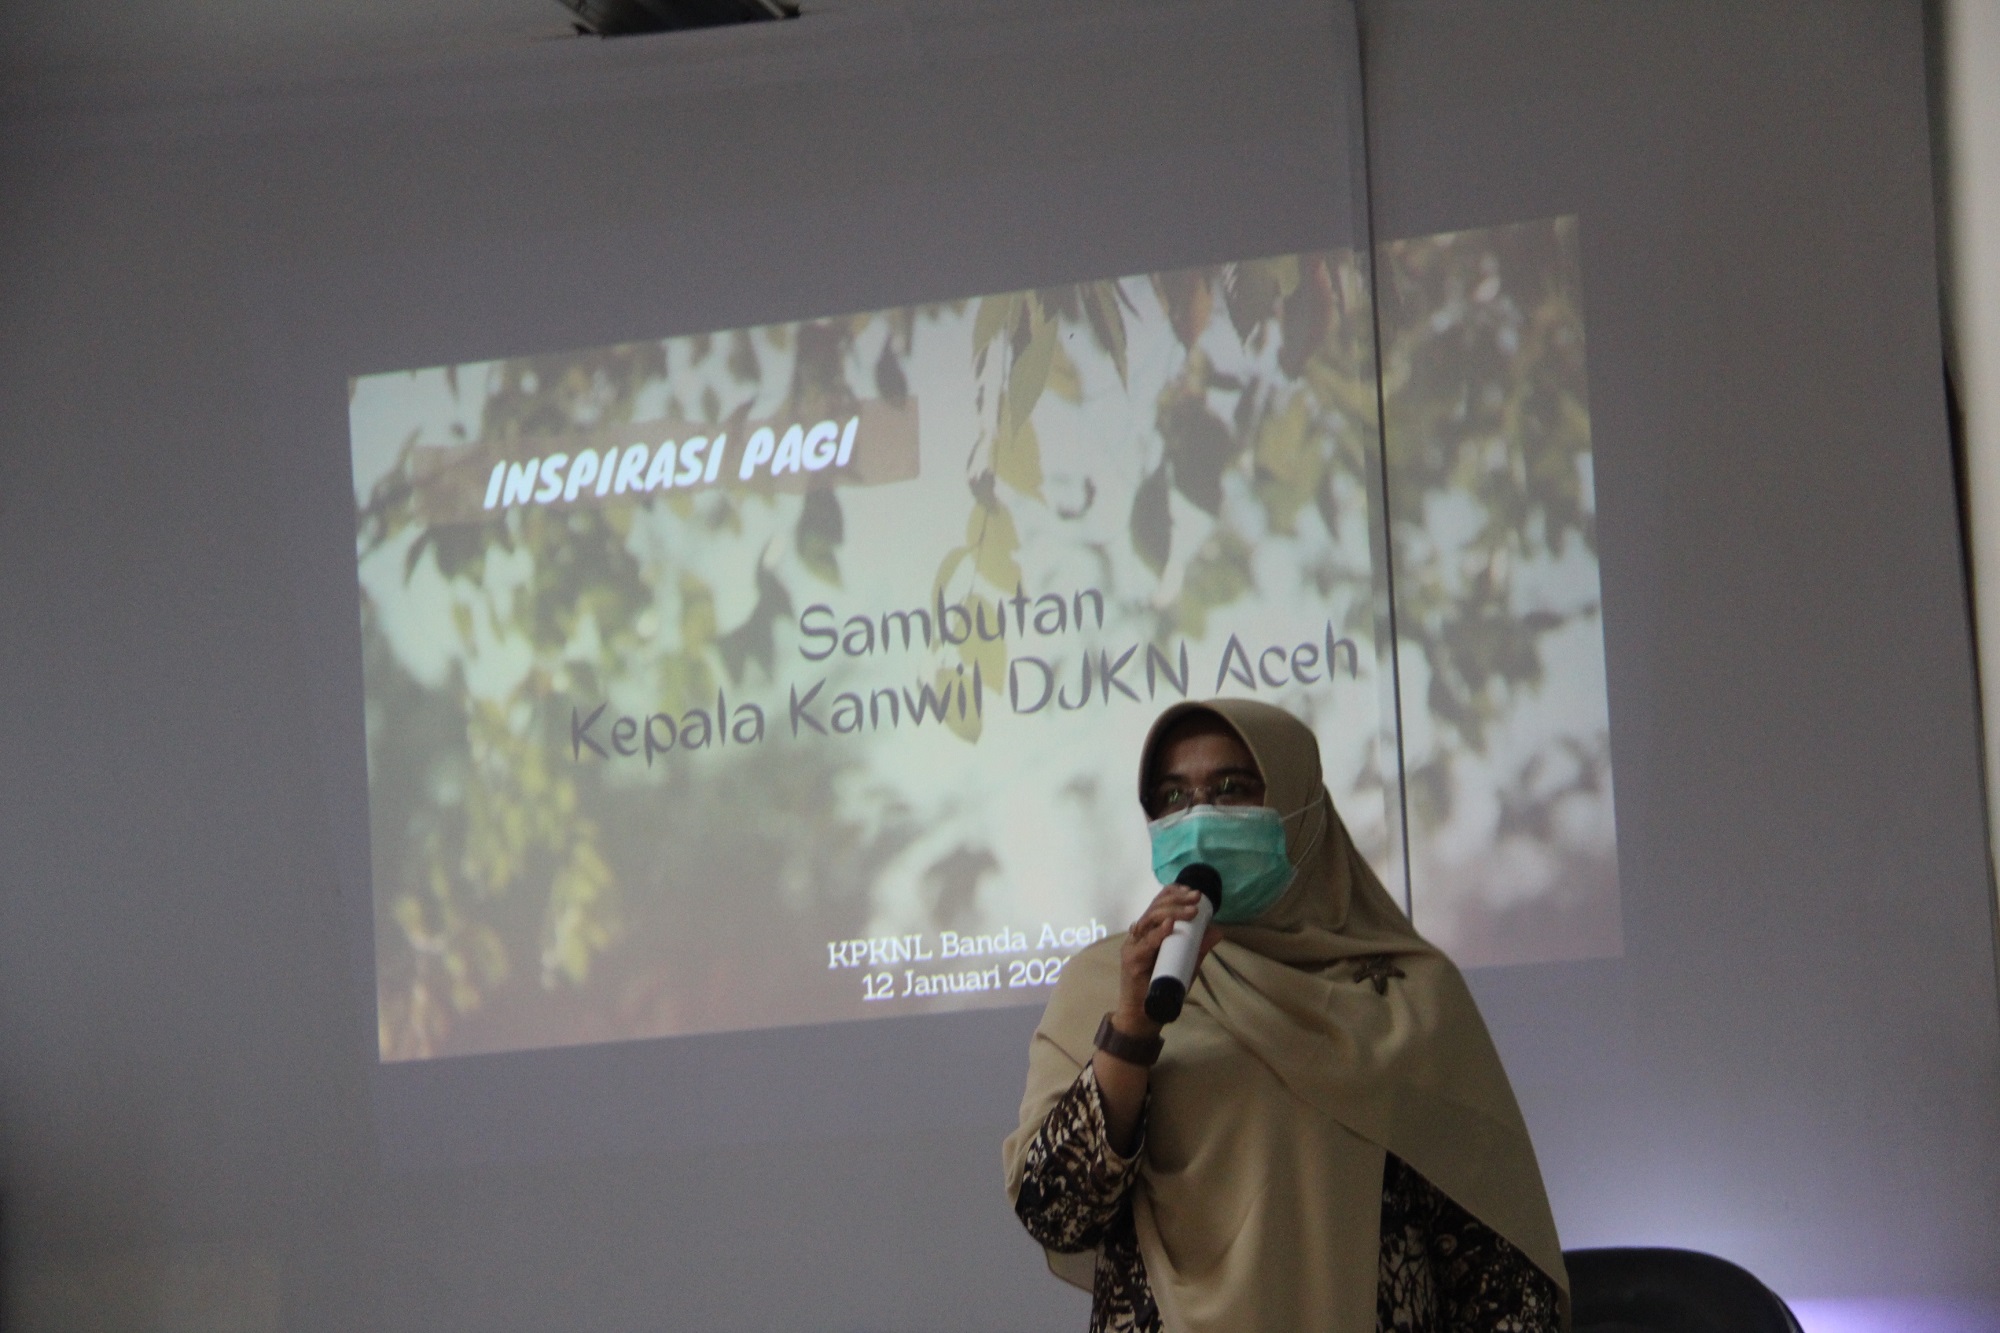 Kakanwil DJKN Aceh Sampaikan Inspirasi Pagi Dalam Menyongsong Tahun 2021